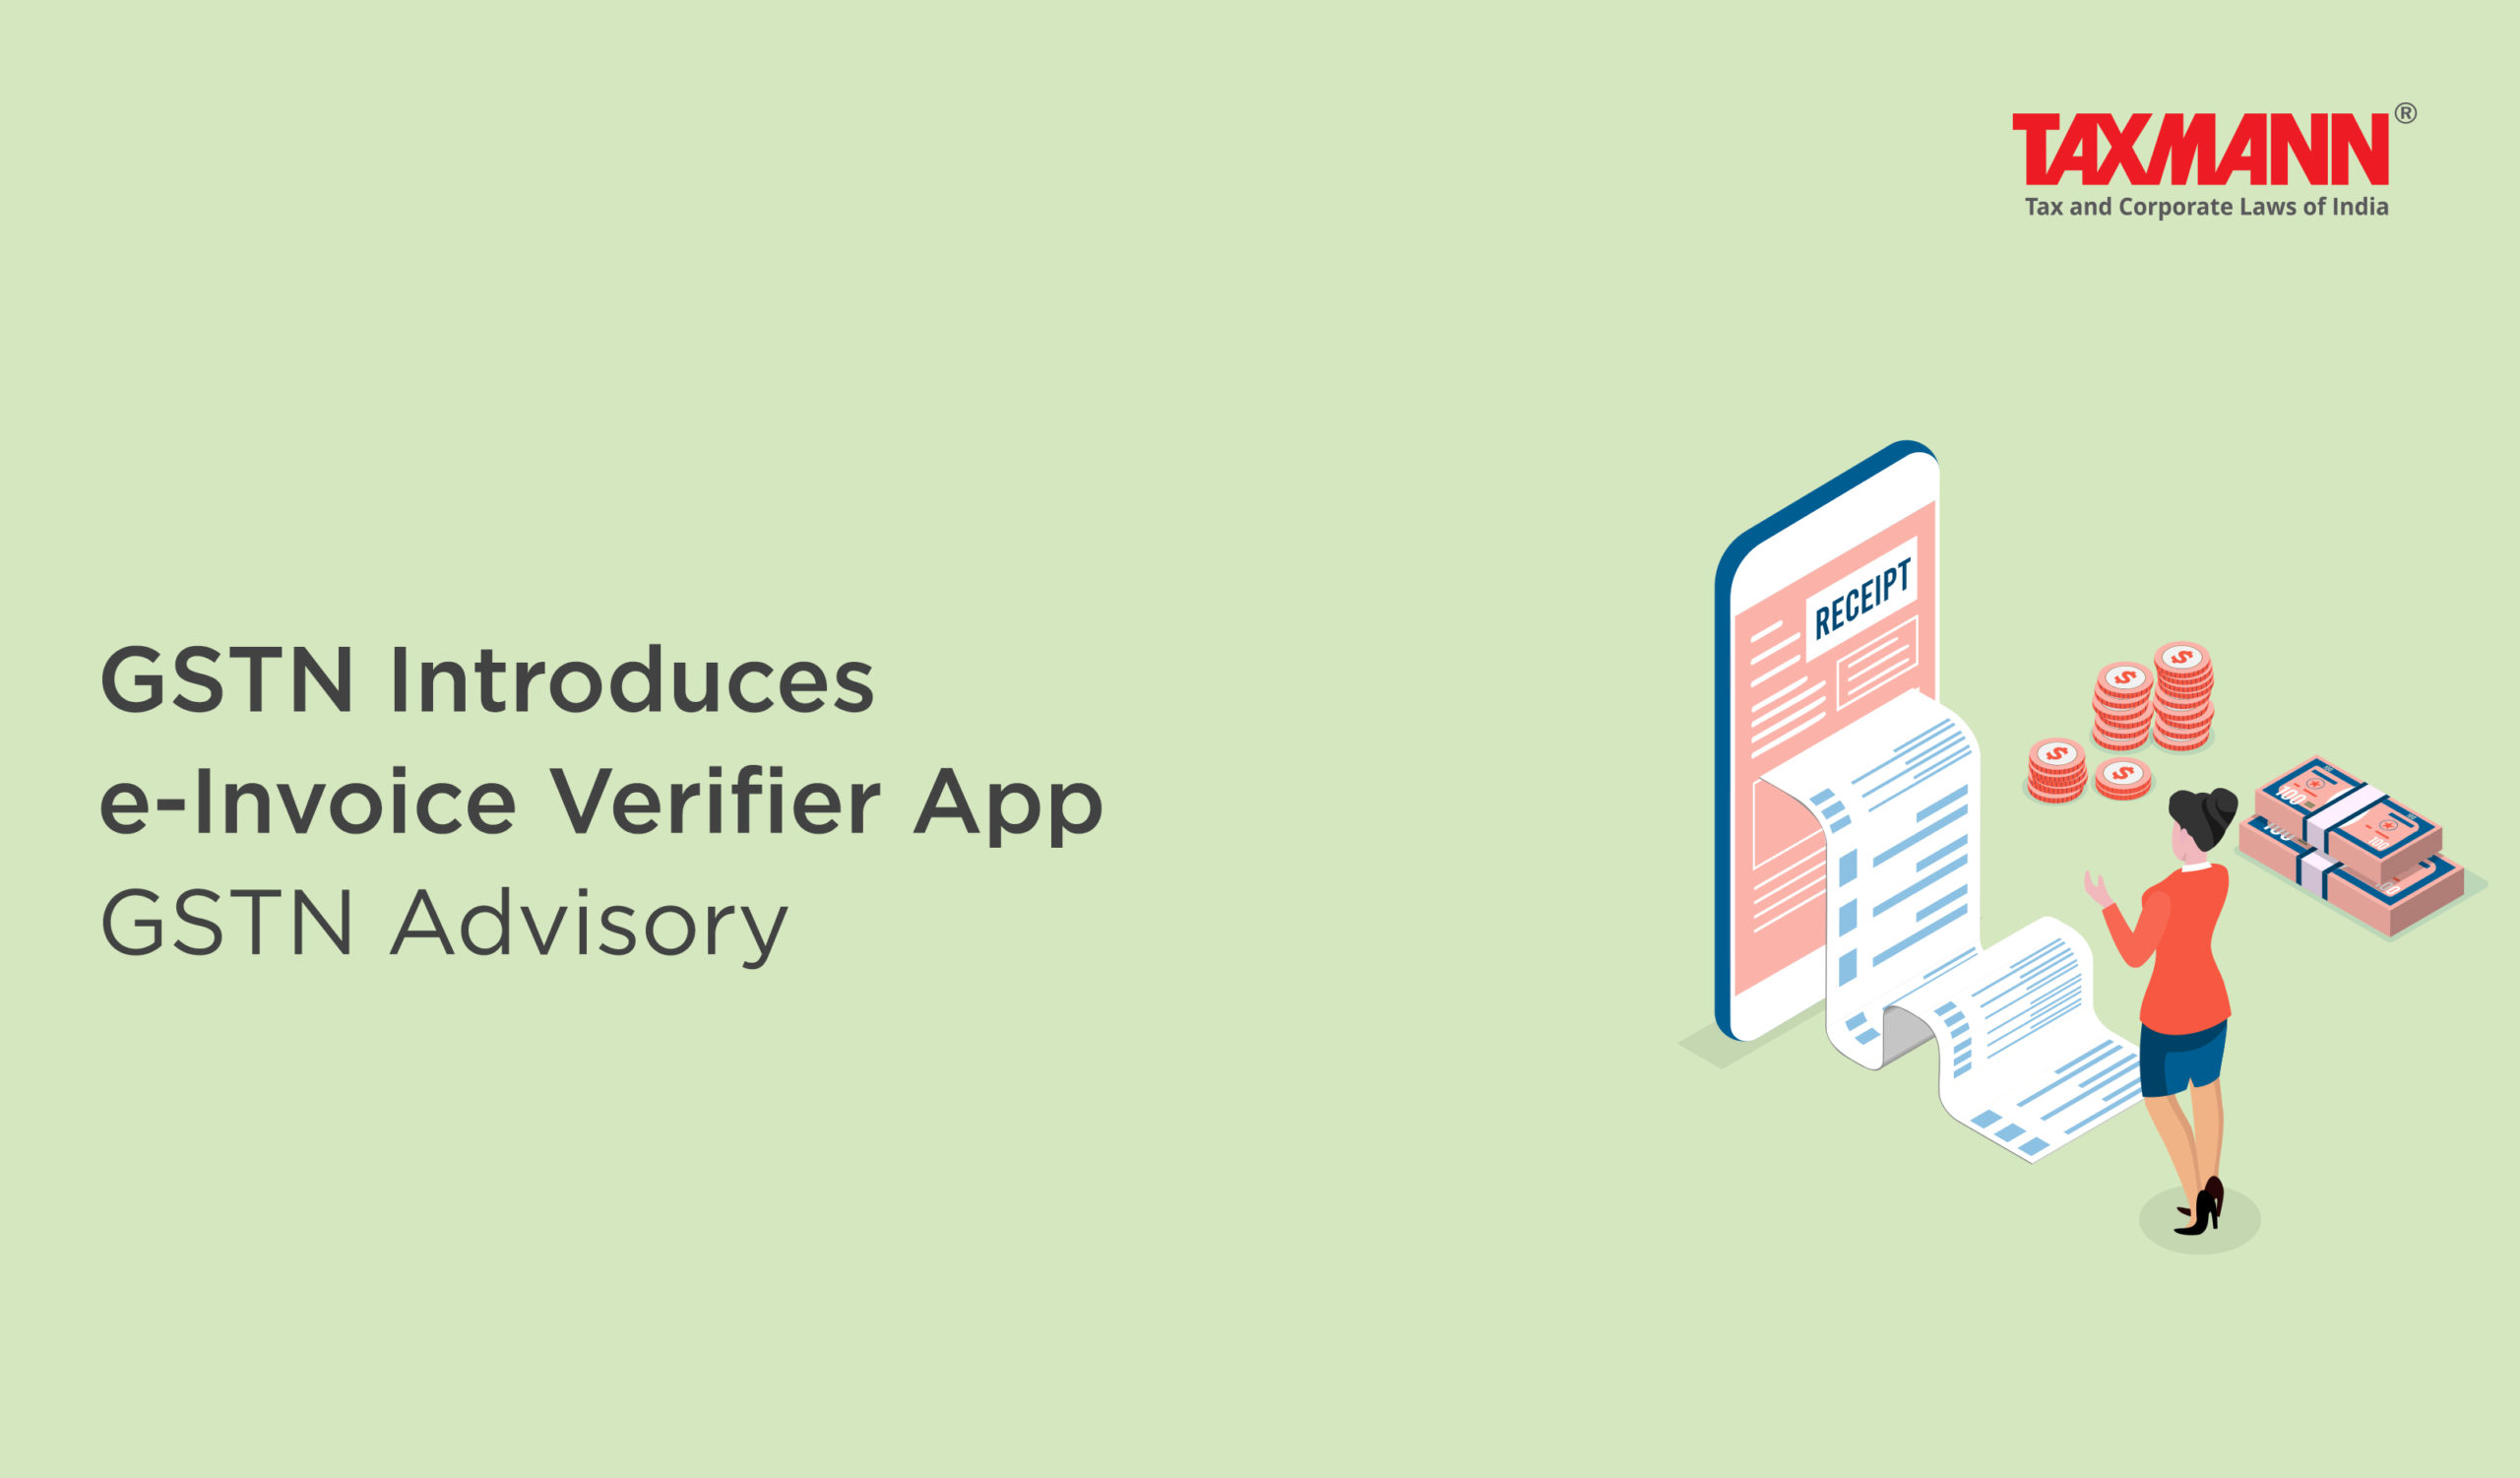 e-Invoice Verifier App